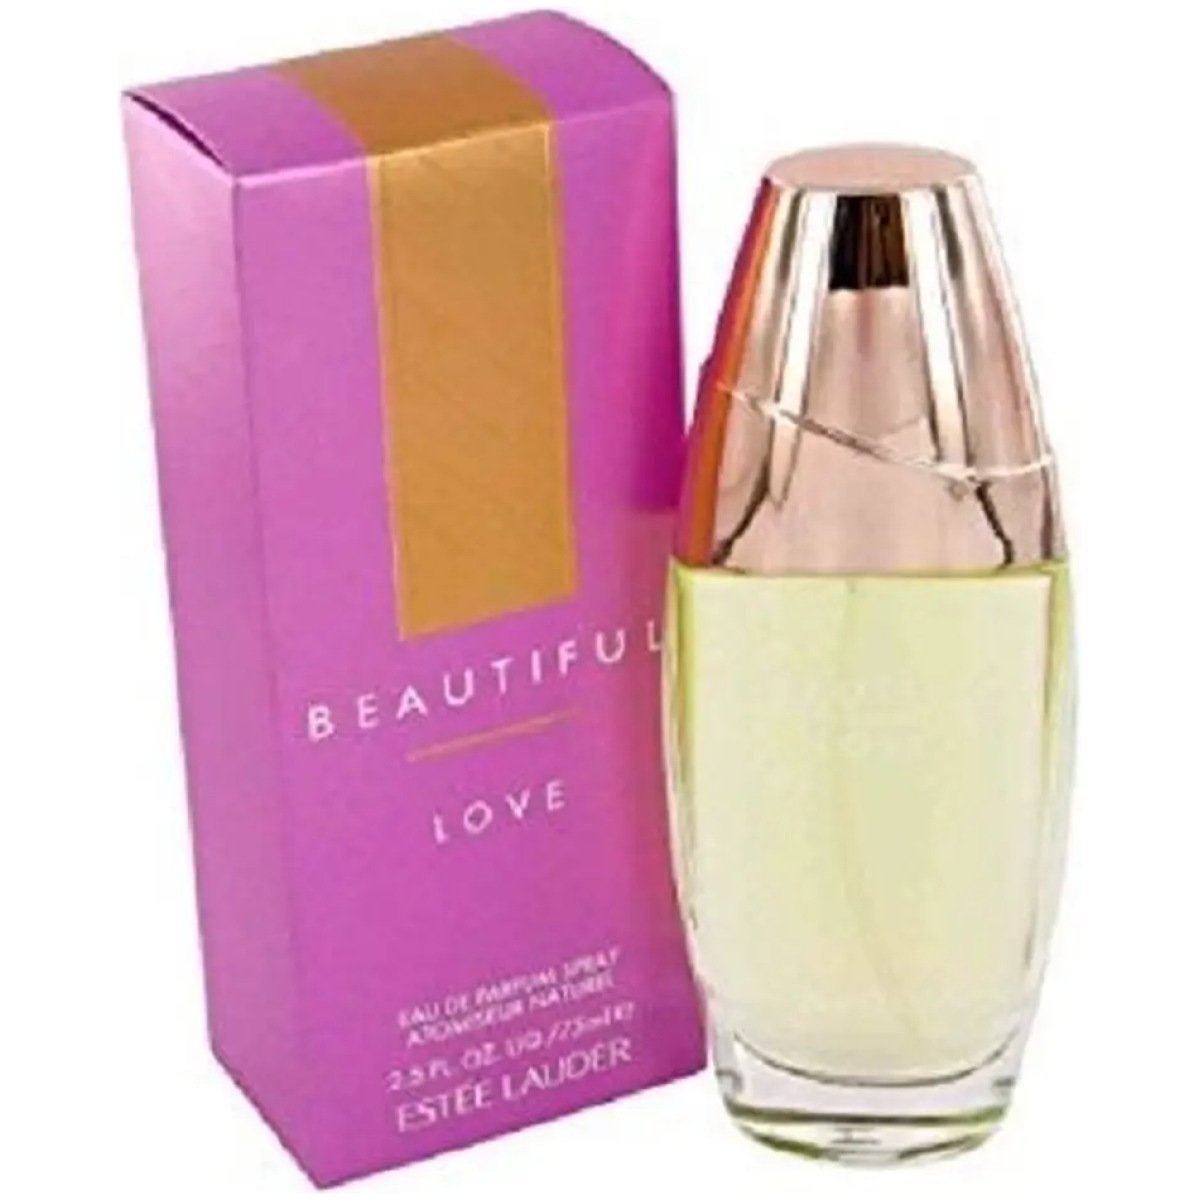 Estee Lauder Beautiful Love EDP Perfume For Women 75 ml